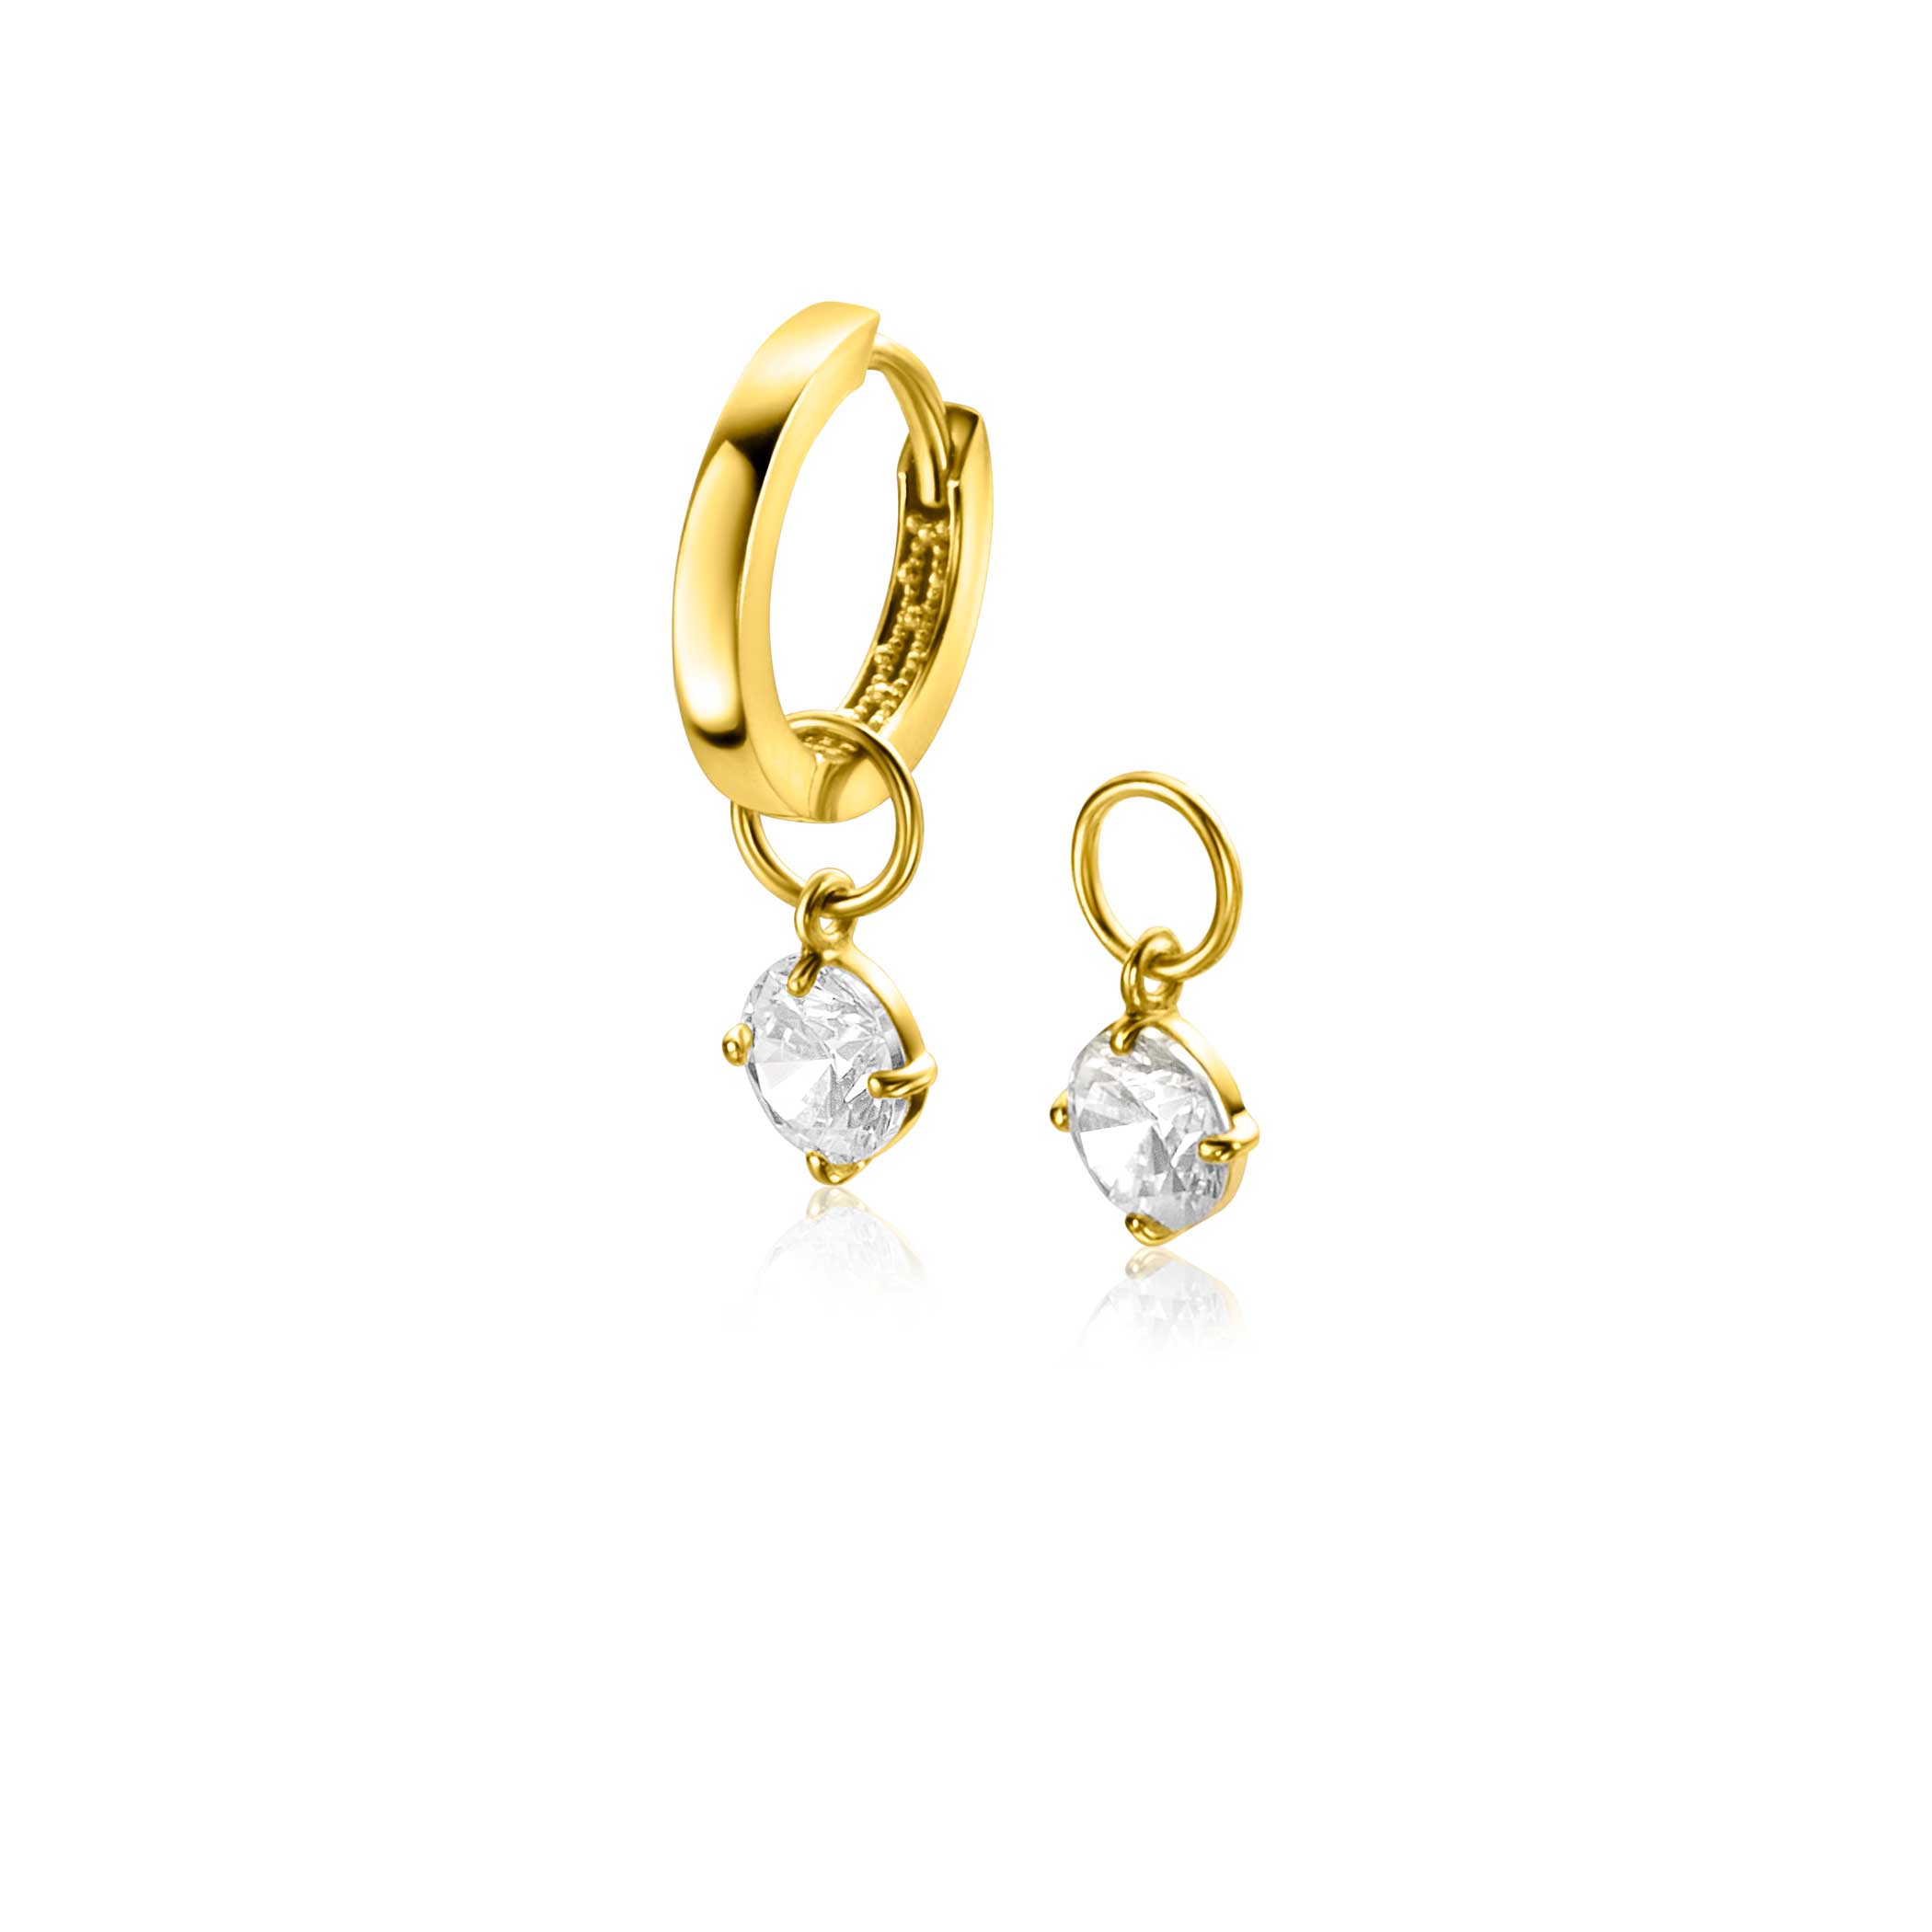 ZINZI 14K Gold Earrings Pendants Prong Setting White Zirconia 6mm ZGCH423 (excl. hoop earrings)